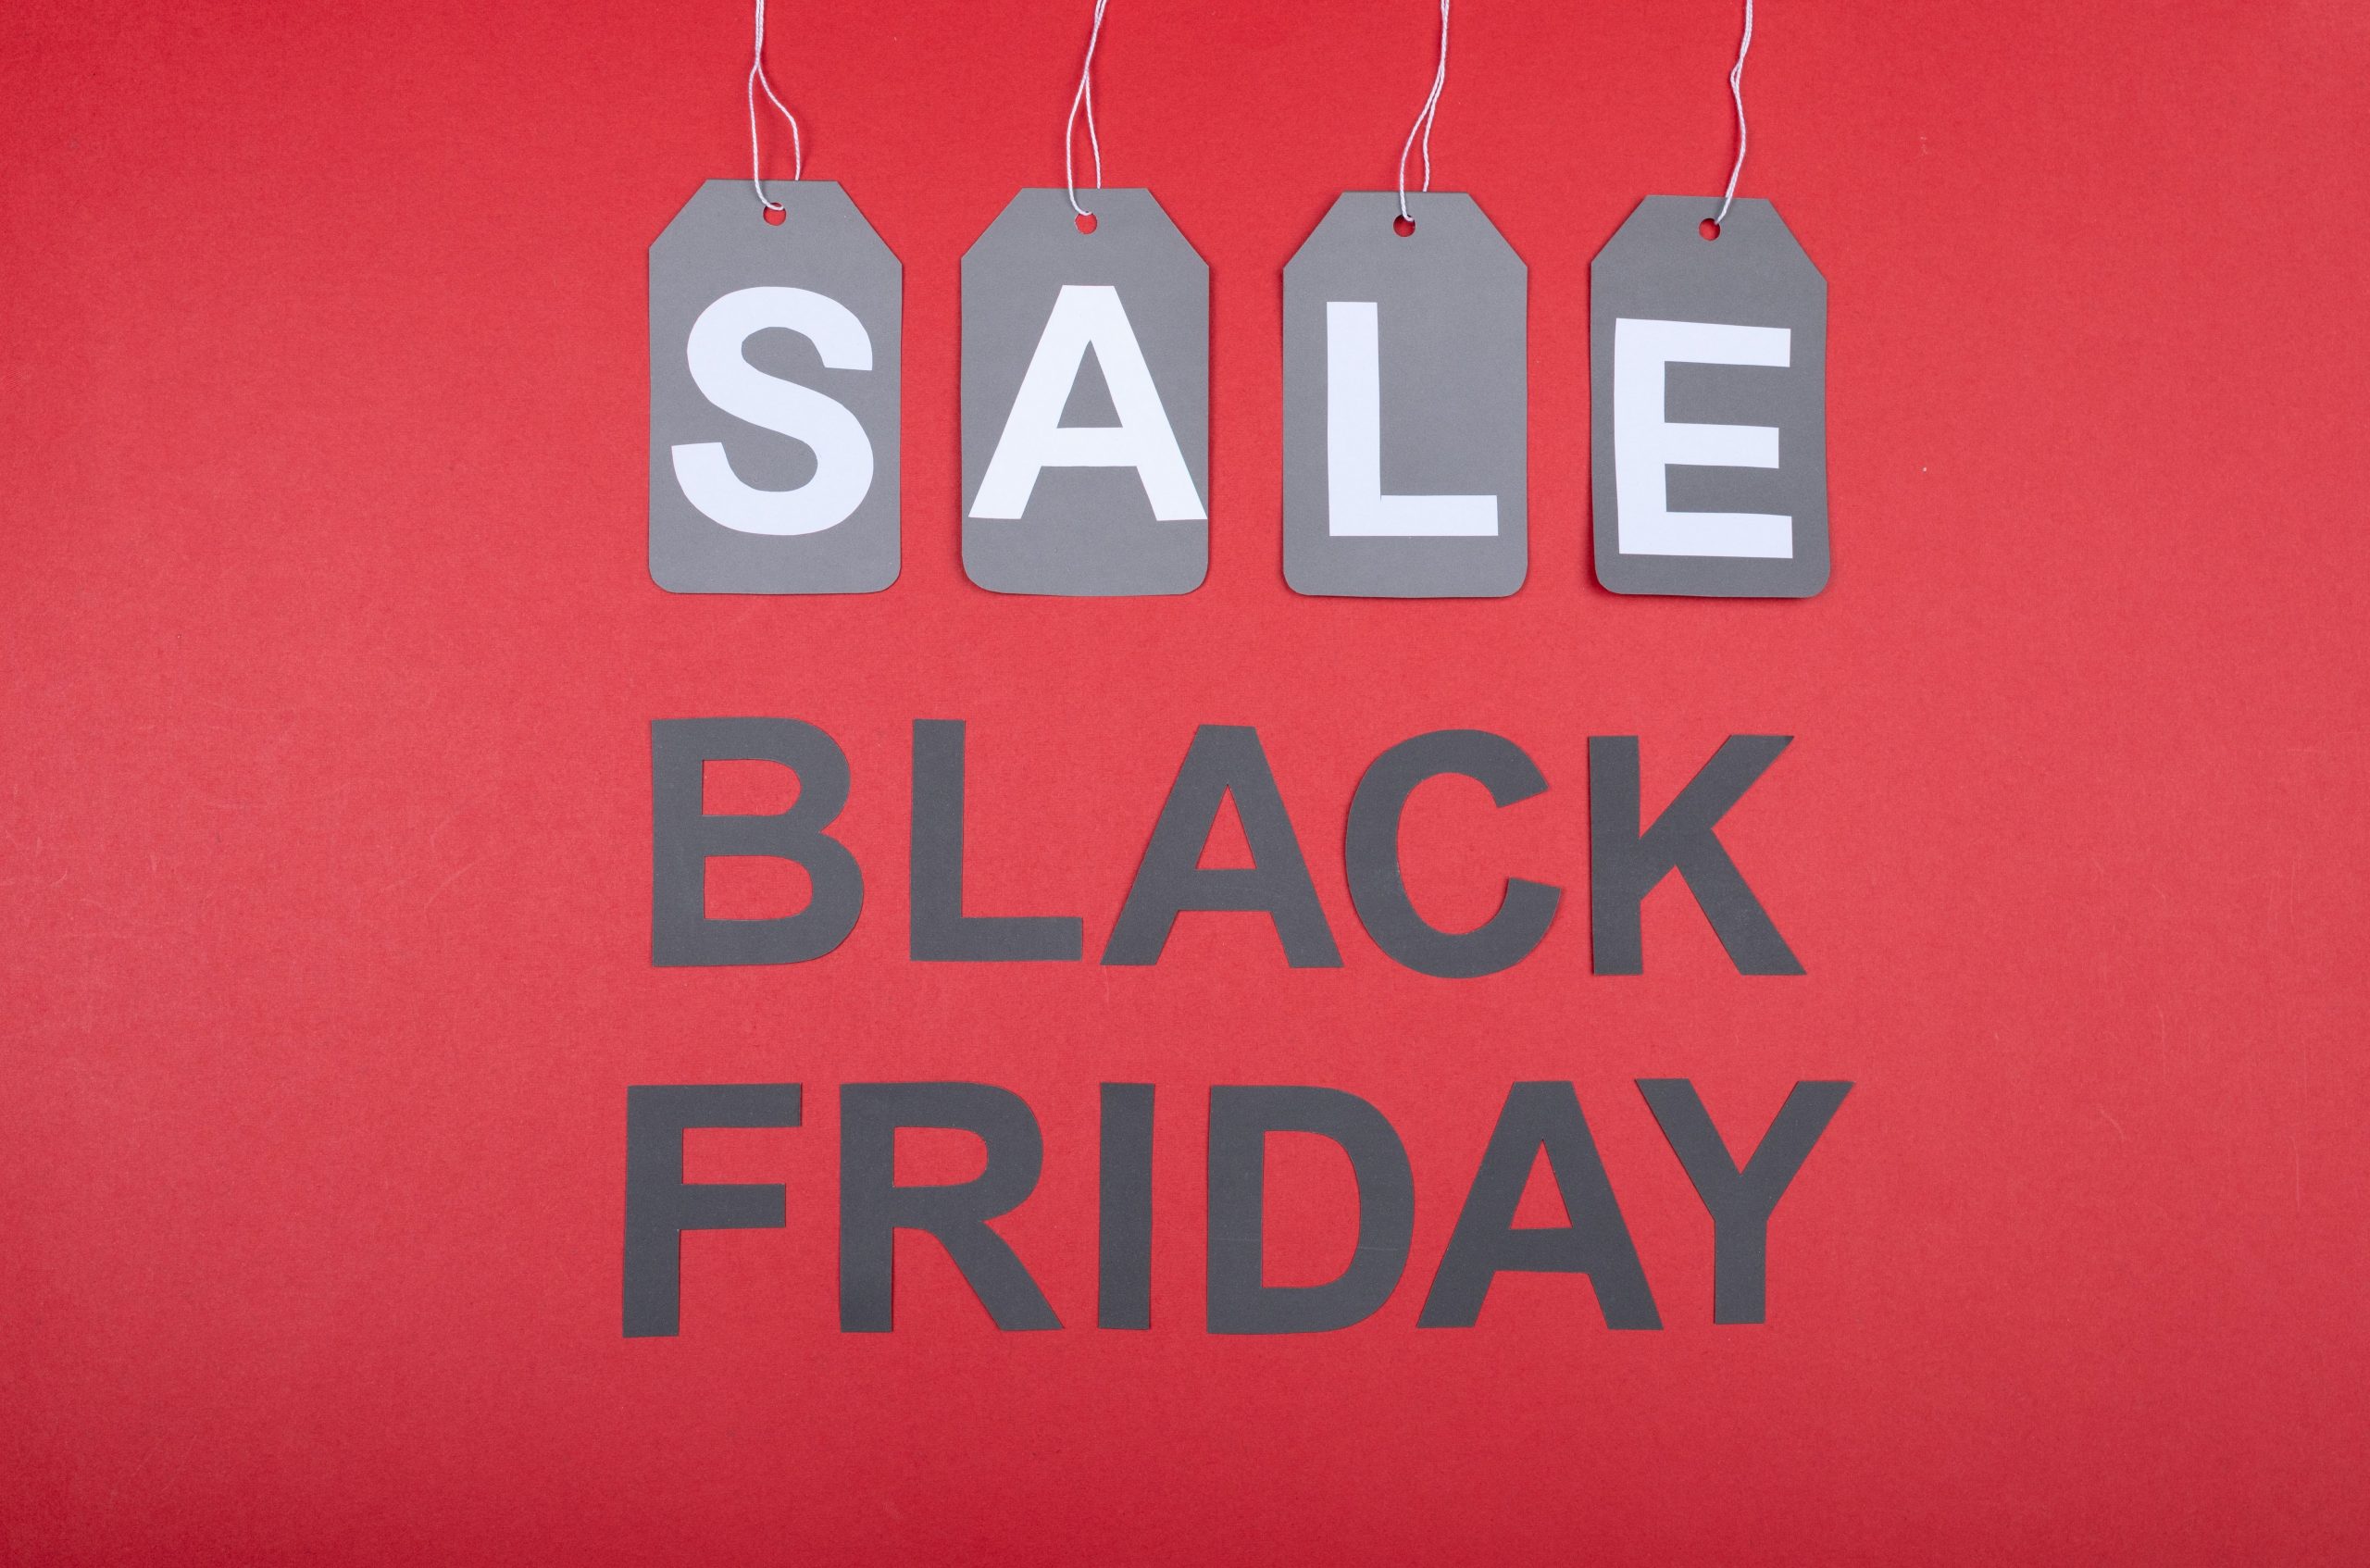 Black Friday: Low discounts has social media irked